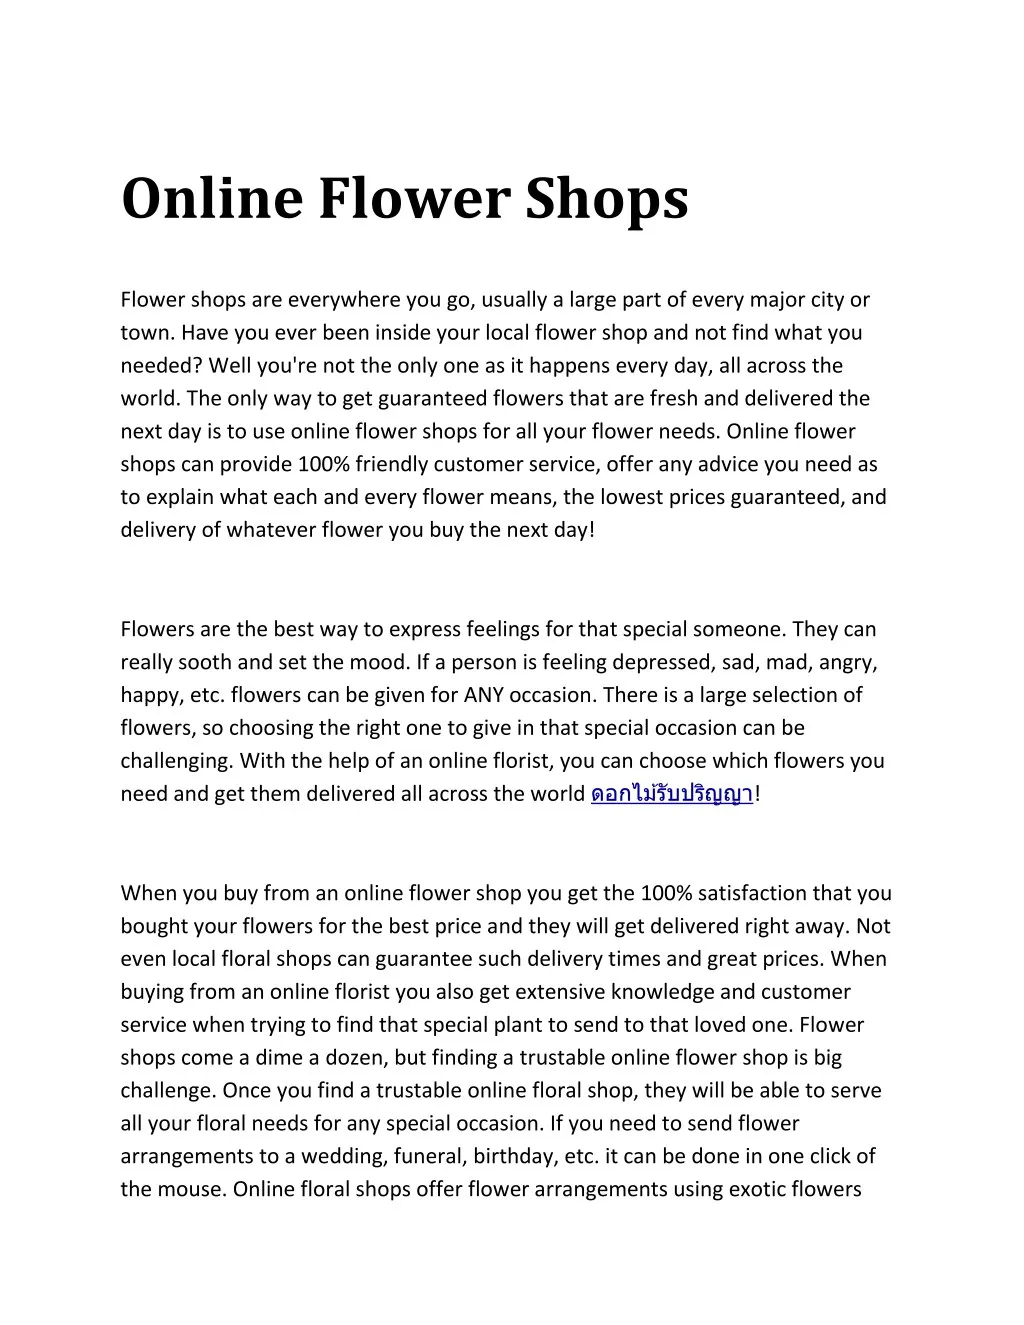 online flower shops